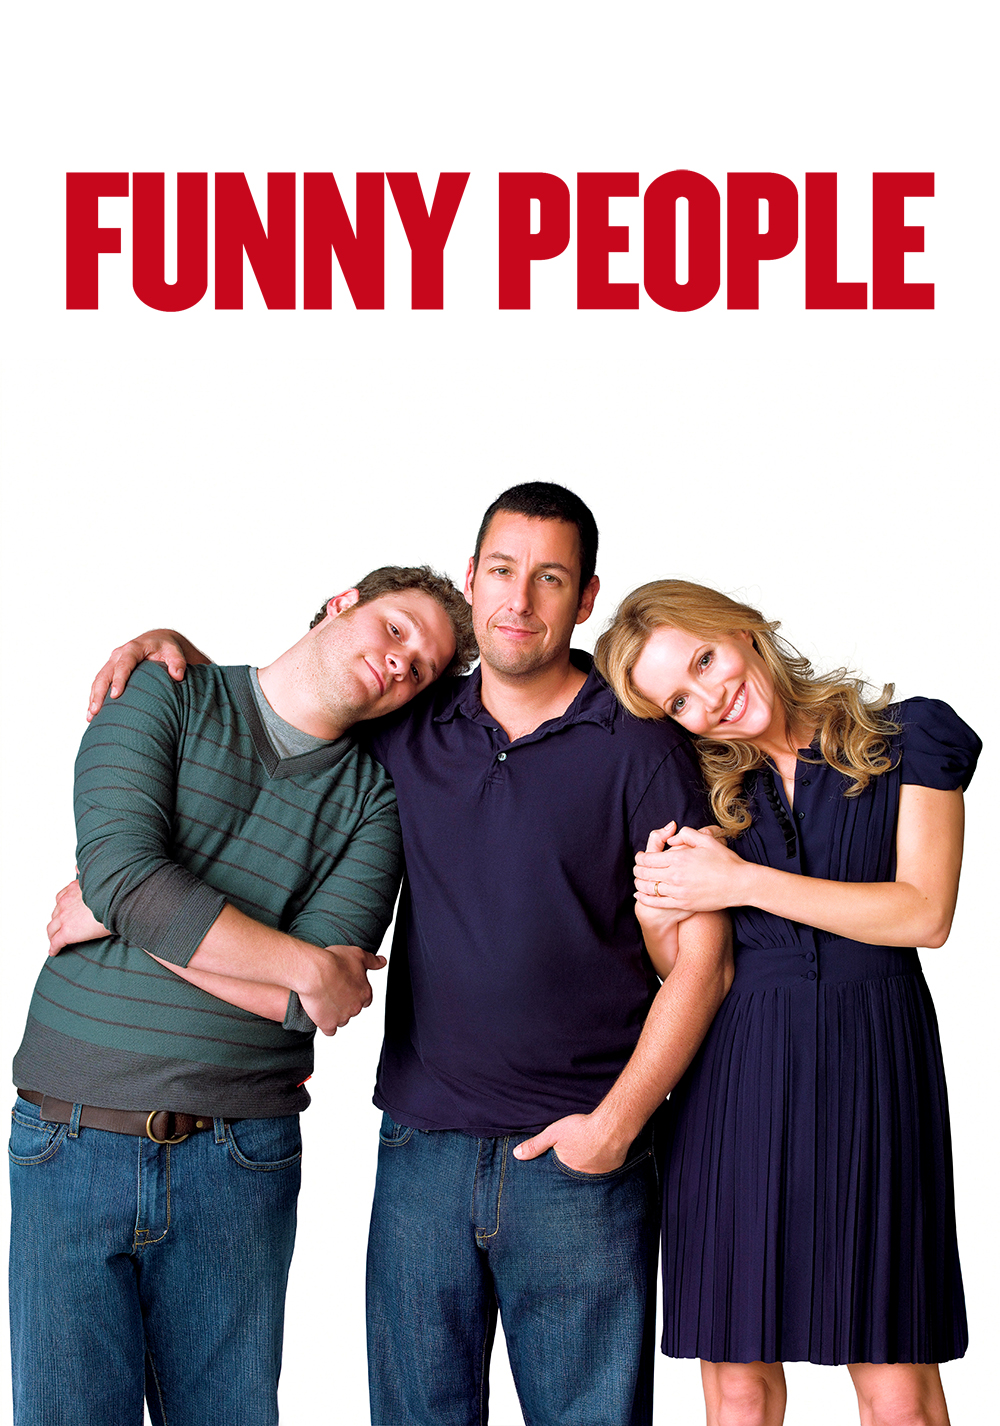 Funny People [HD] (2009)